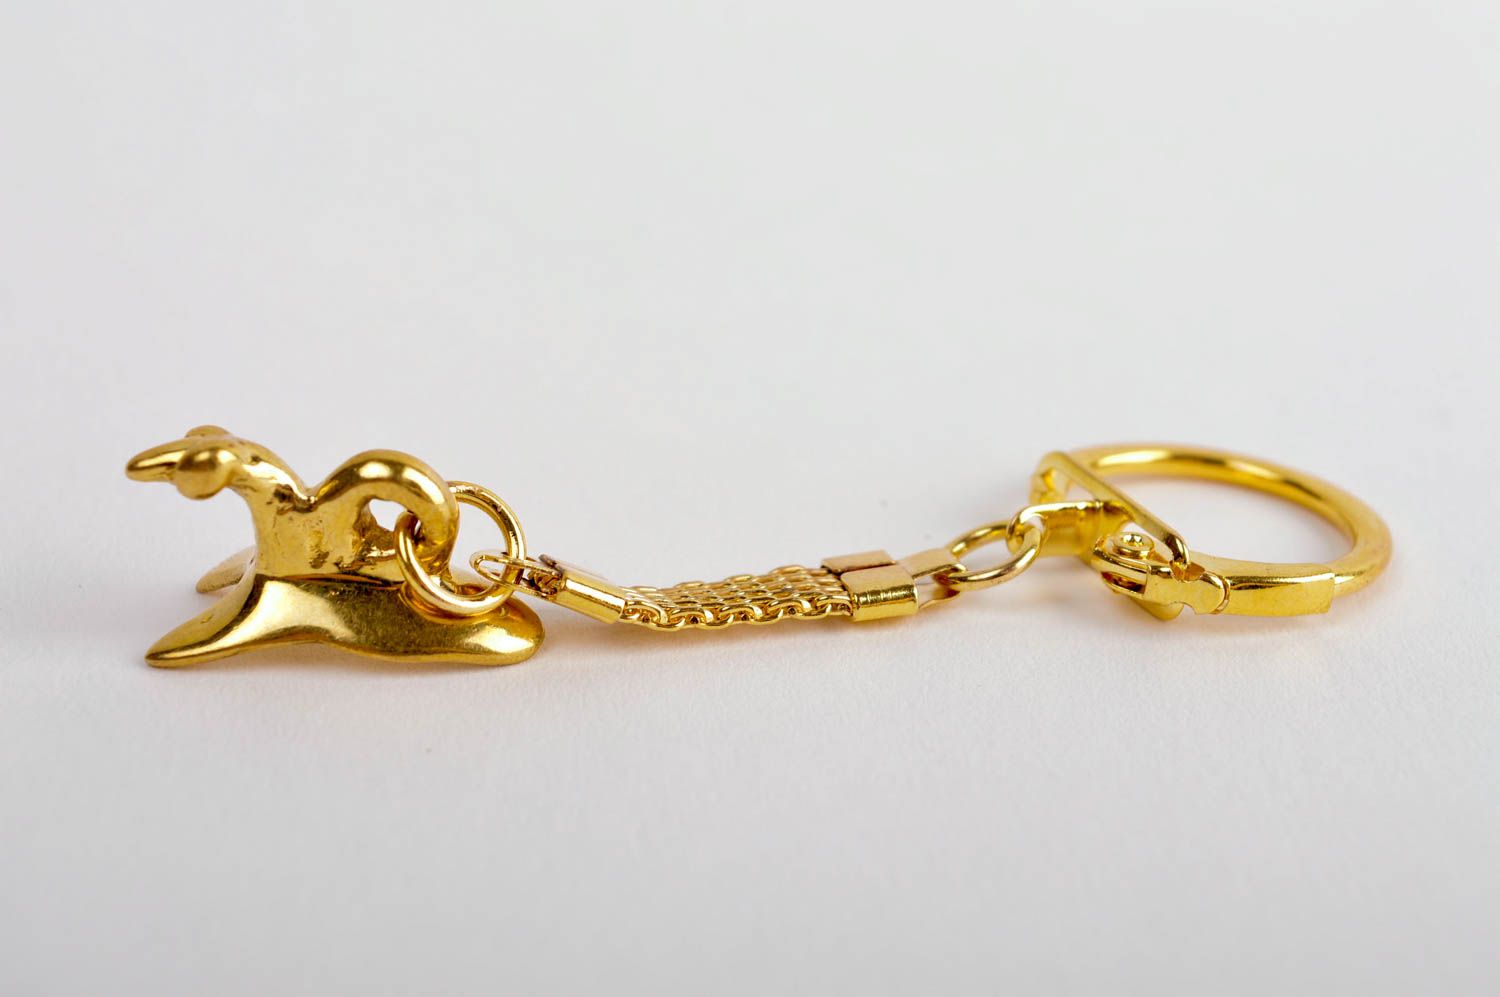 Unusual handmade metal keychain cool keyrings handmade accessories buy a gift photo 2